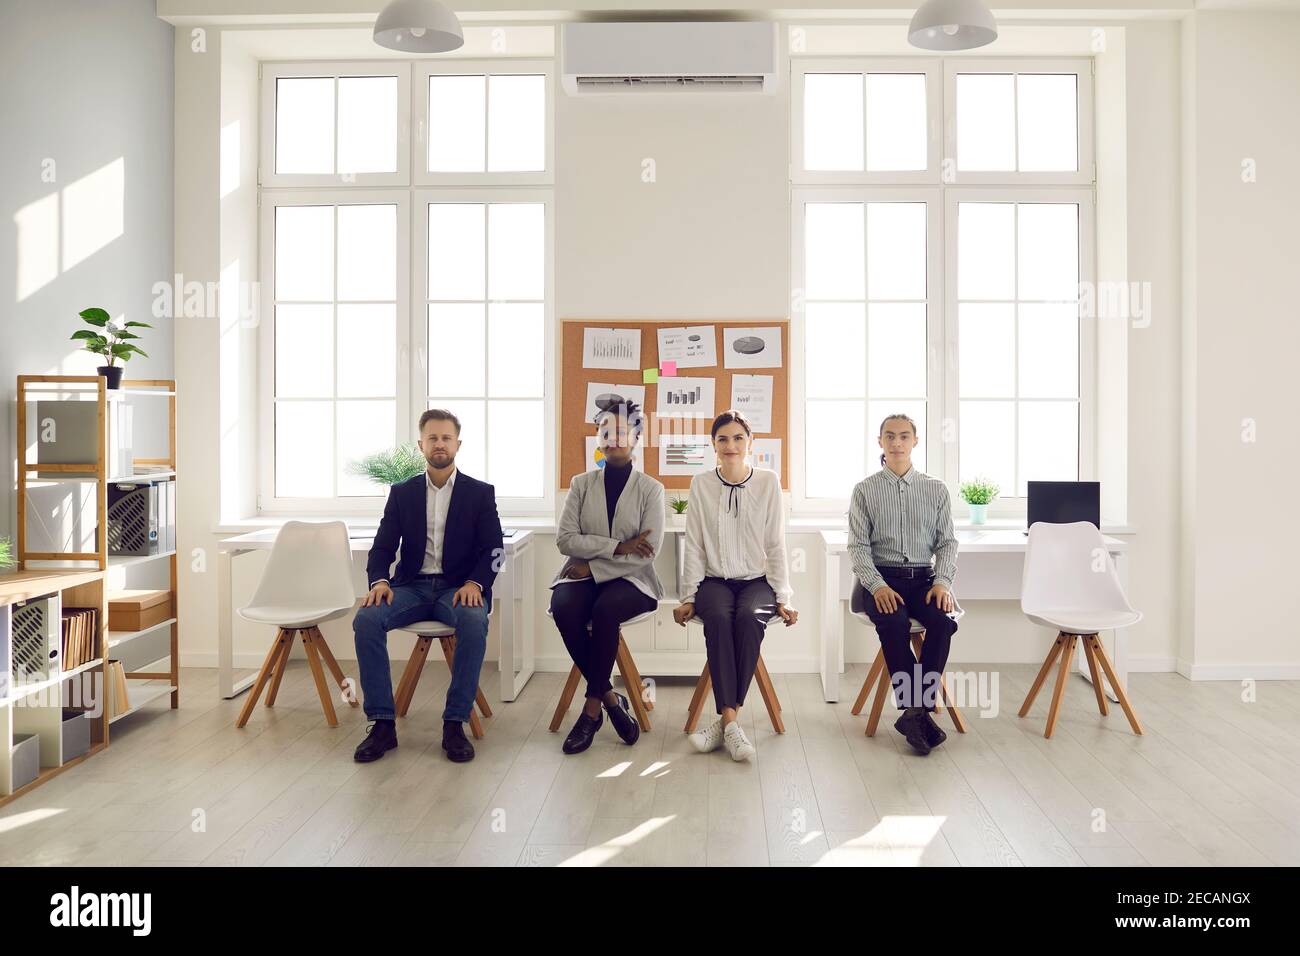 Multiethnic staff, international company, teamwork concept Stock Photo